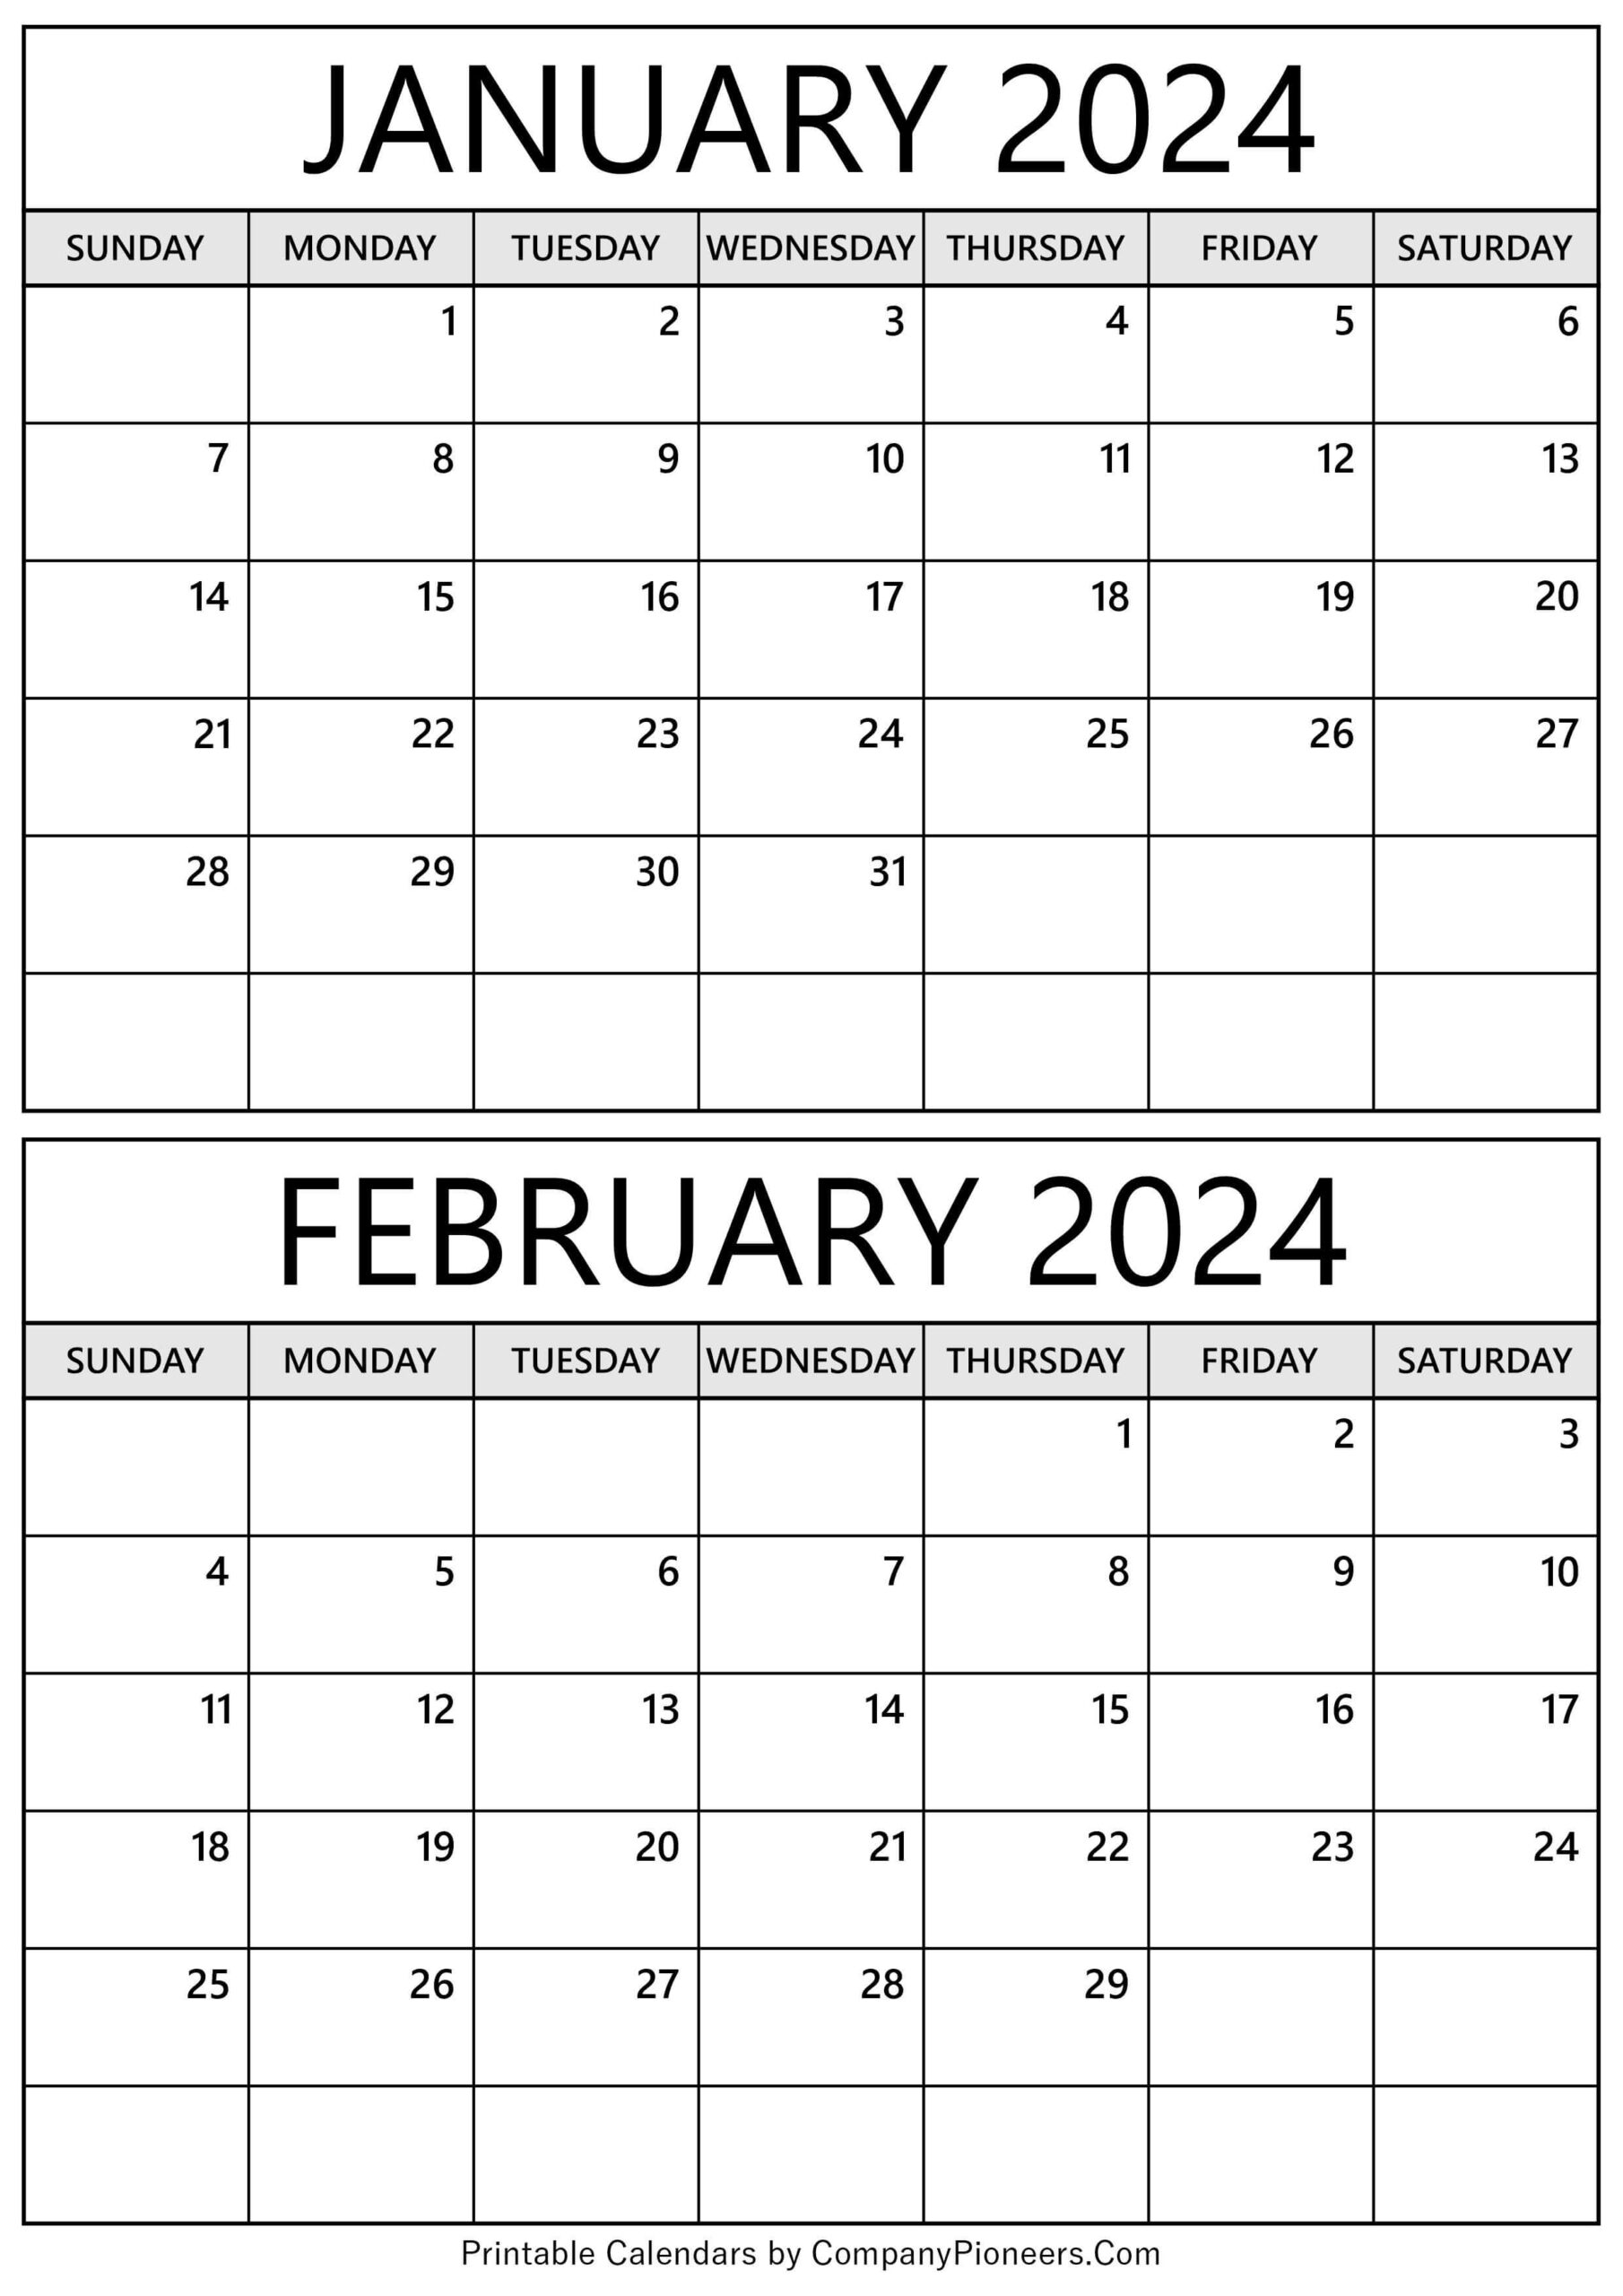 January February 2024 Calendar Printable - Template for Printable January February 2024 Calendar